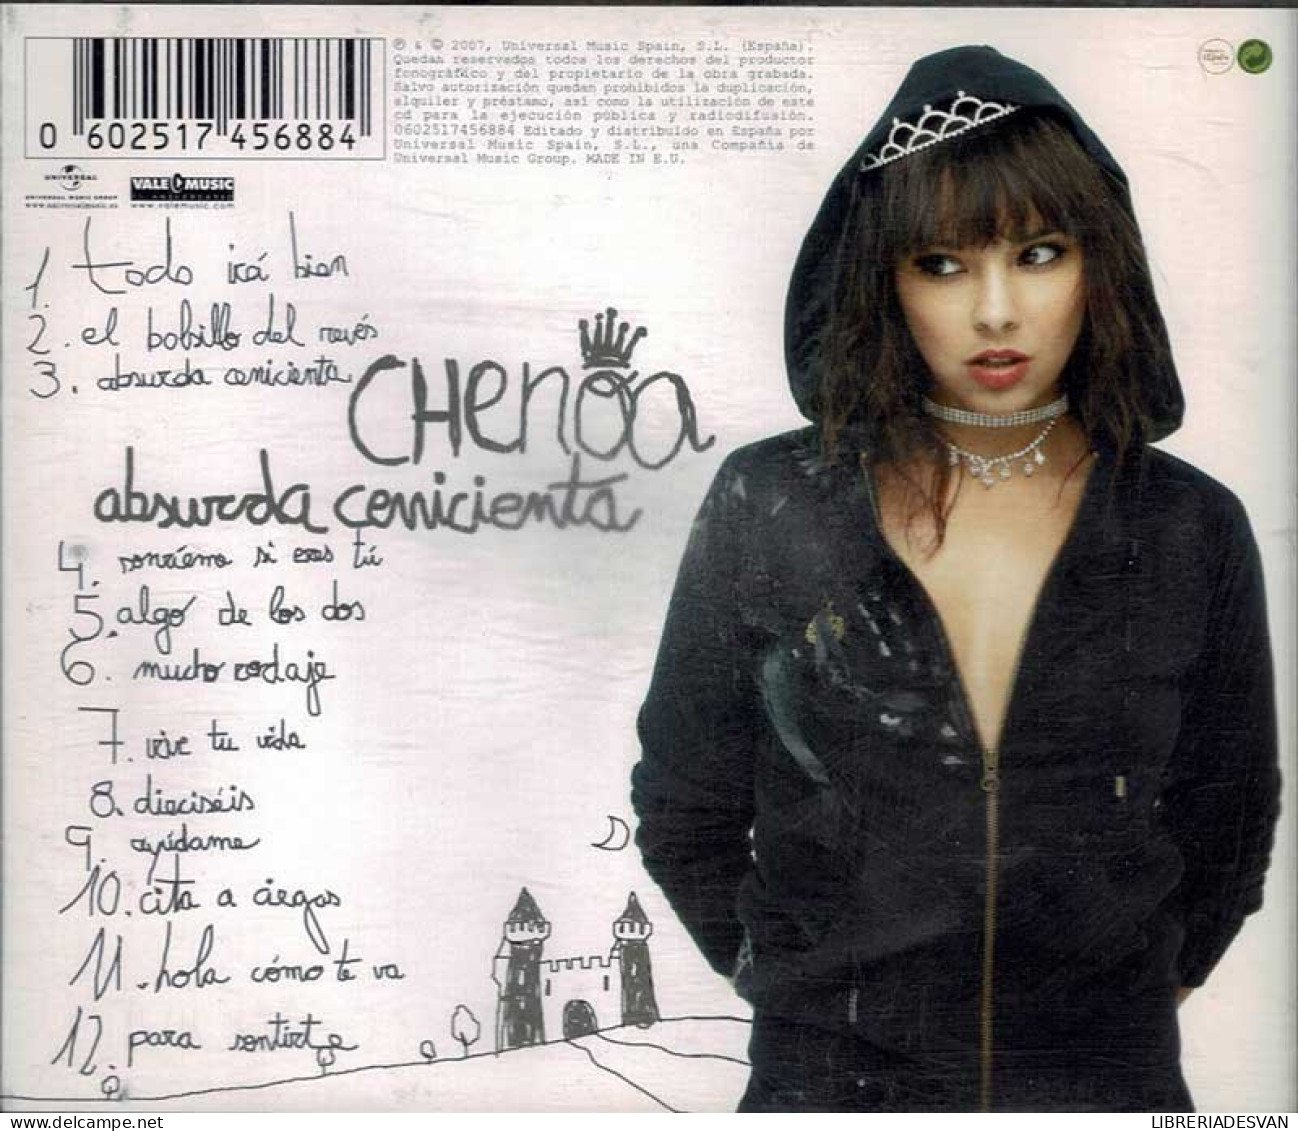 Chenoa - Absurda Cenicienta. CD - Disco, Pop